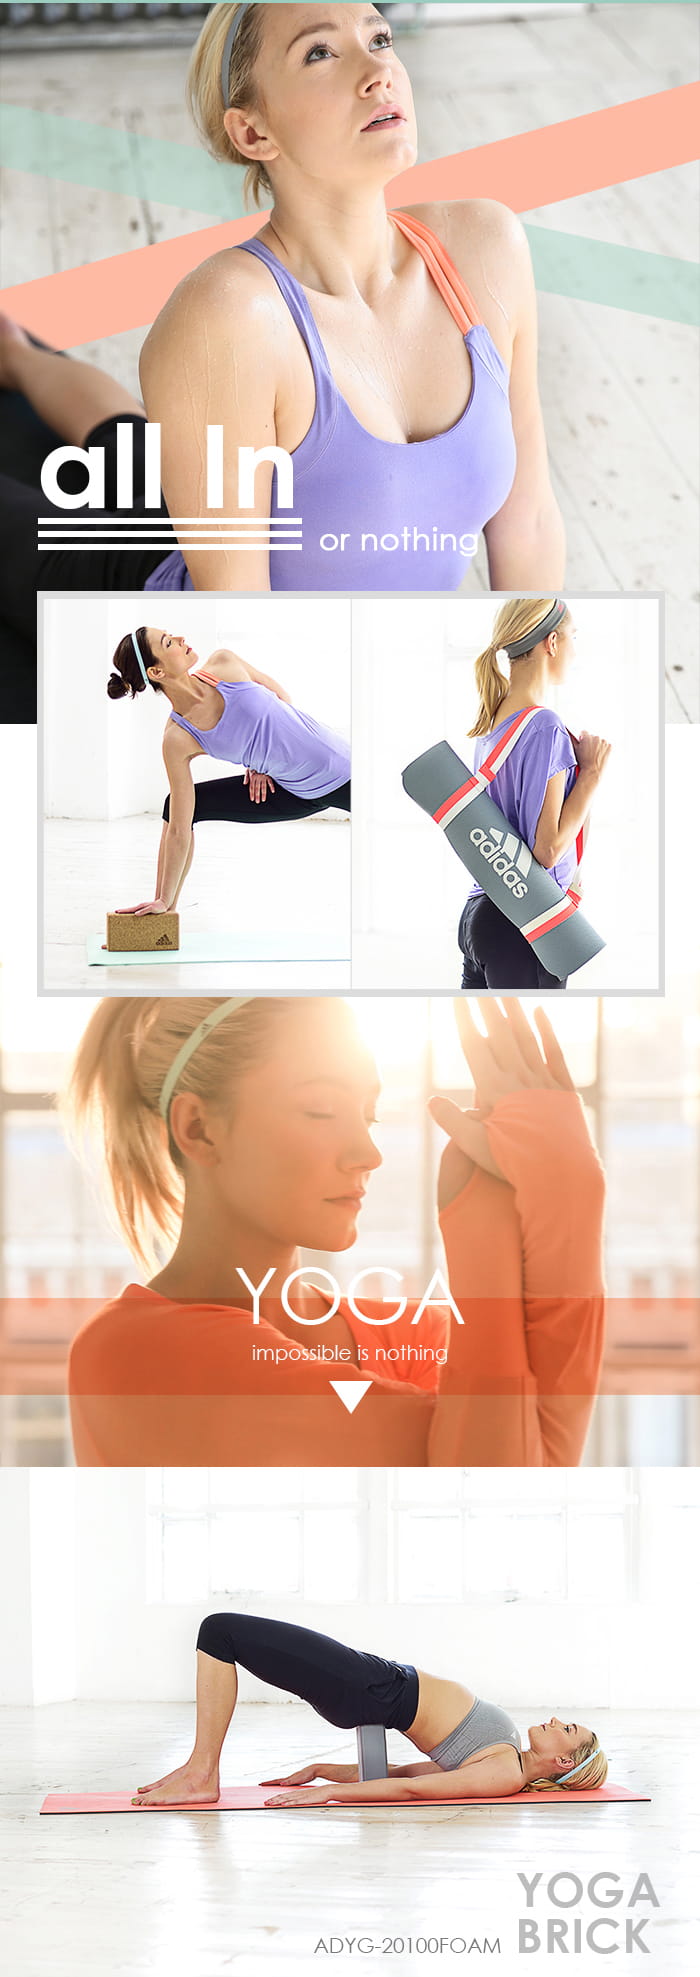 【adidas】Adidas Yoga 專業訓練泡沫瑜珈磚 1